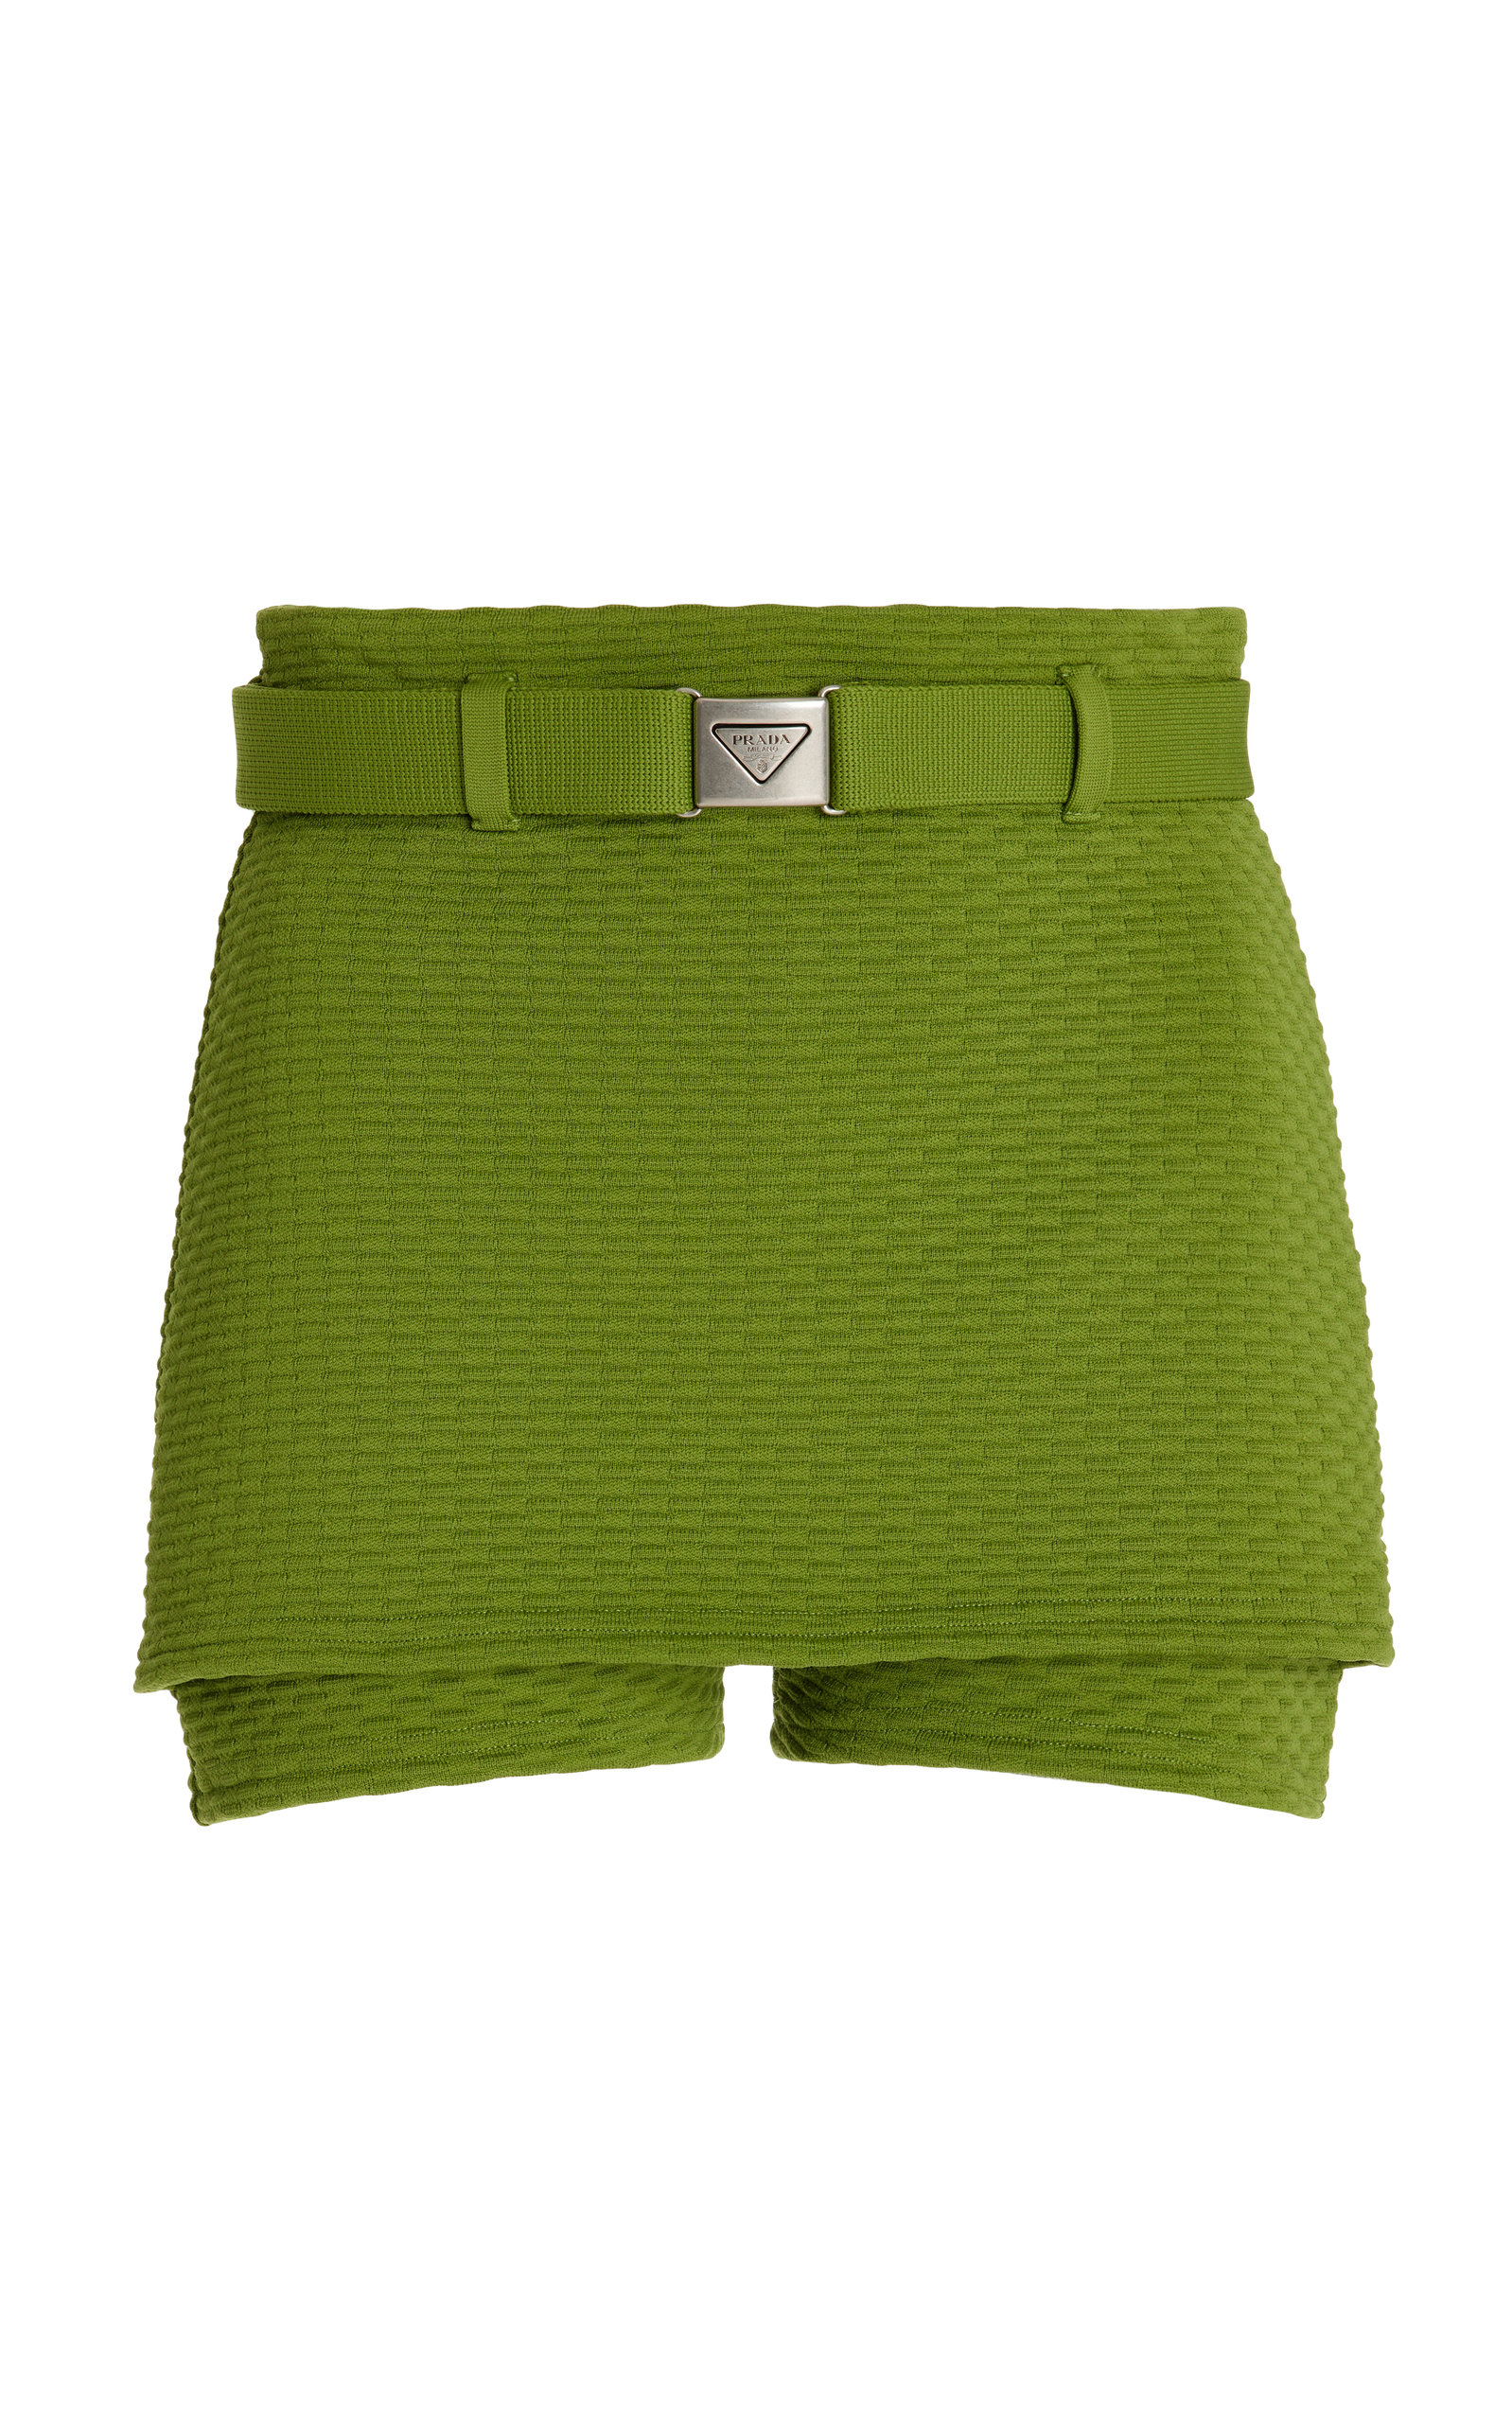 Prada - Women's Jacquard Mini Shorts - Green - IT 38 - Moda Operandi